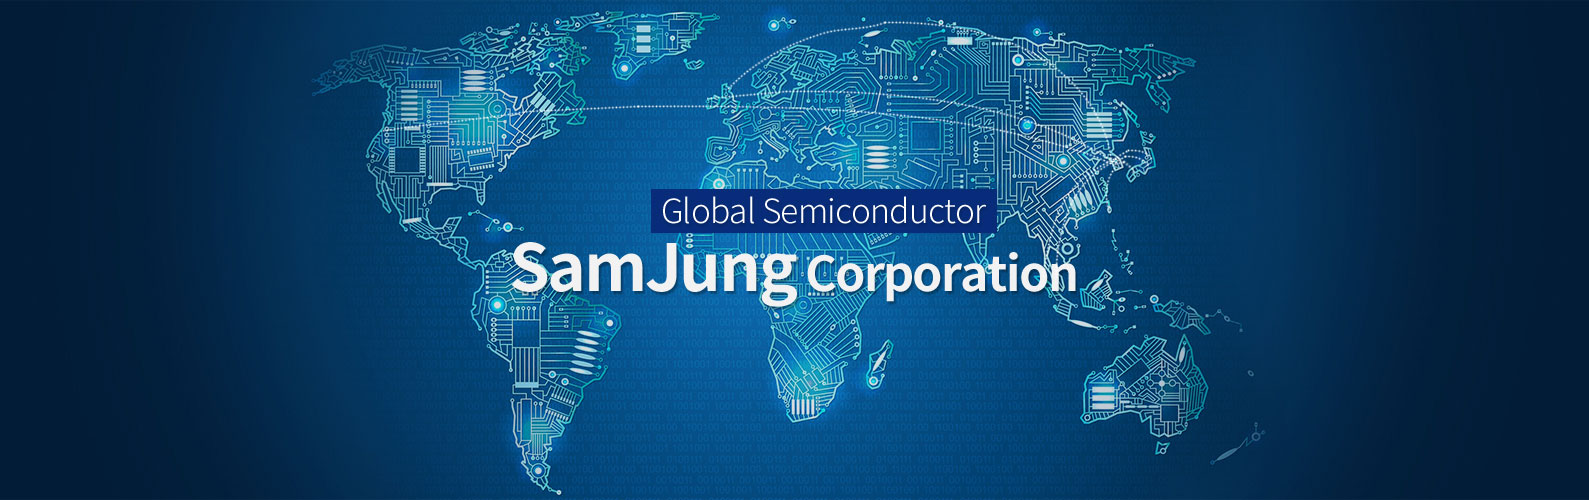 Global semiconductor SamJum Corporation